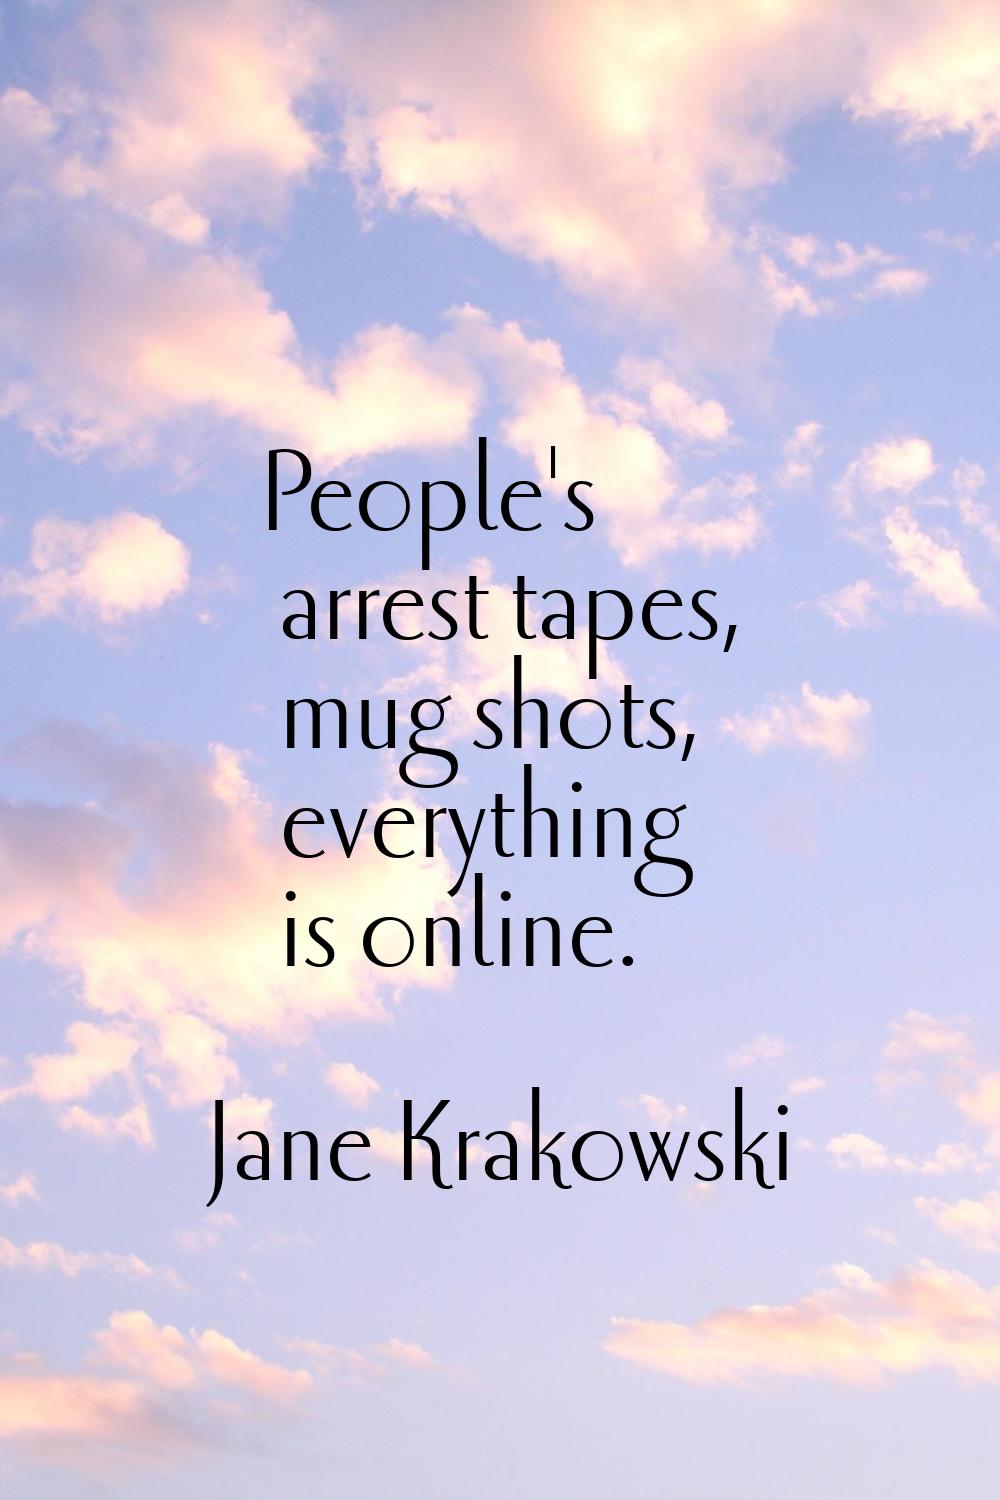 People's arrest tapes, mug shots, everything is online.